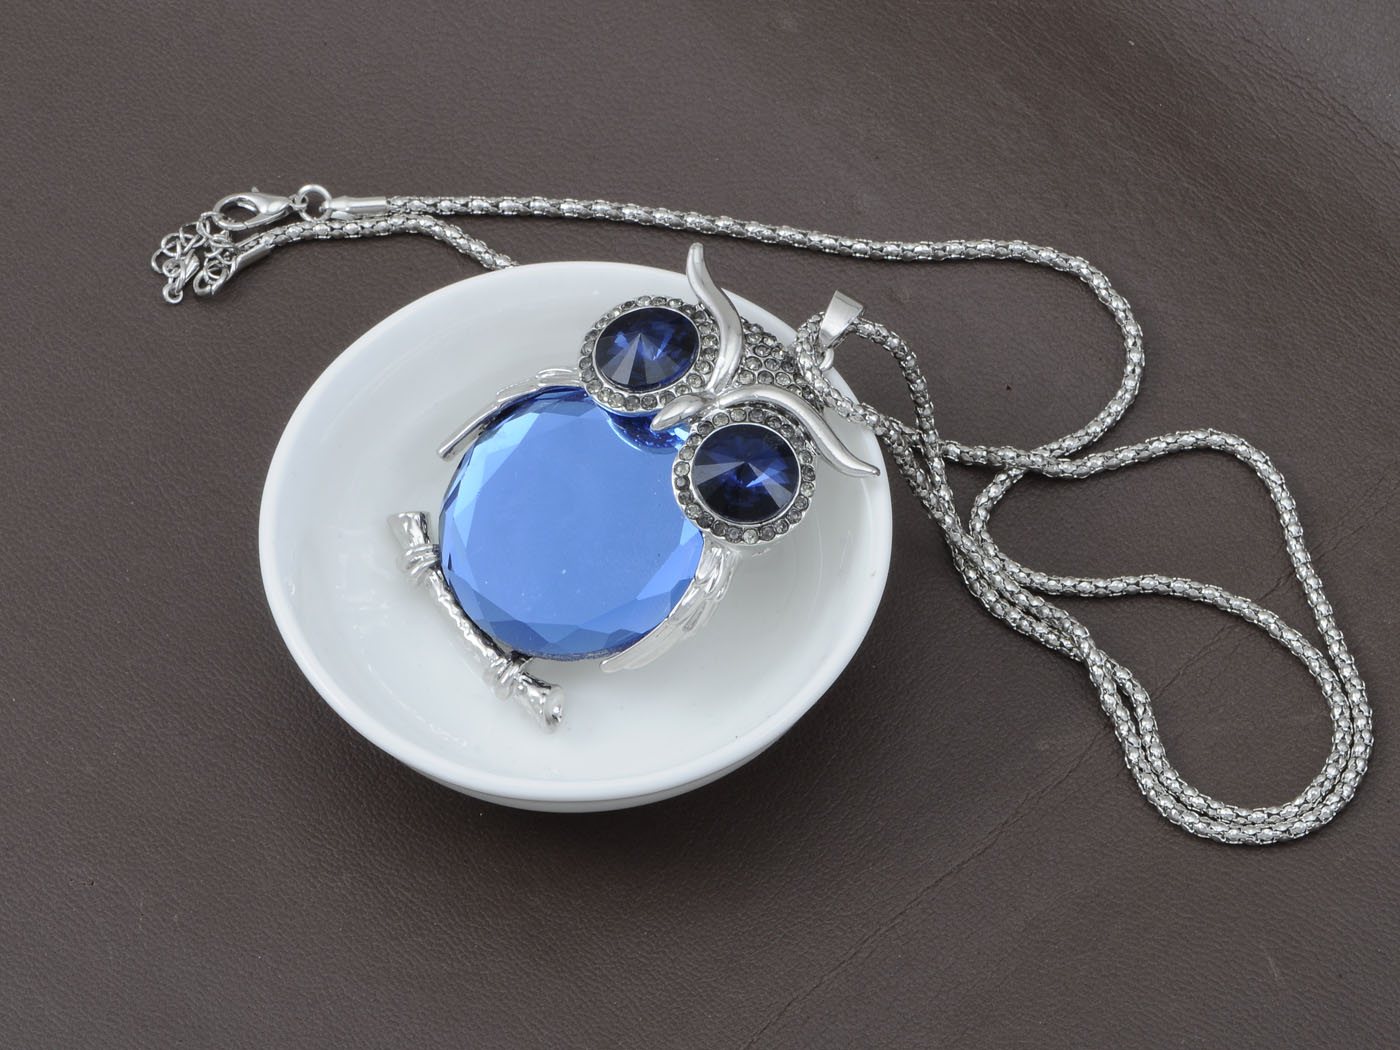 Sapphire Blue Colored Fat Owl Bird Pendant Necklace